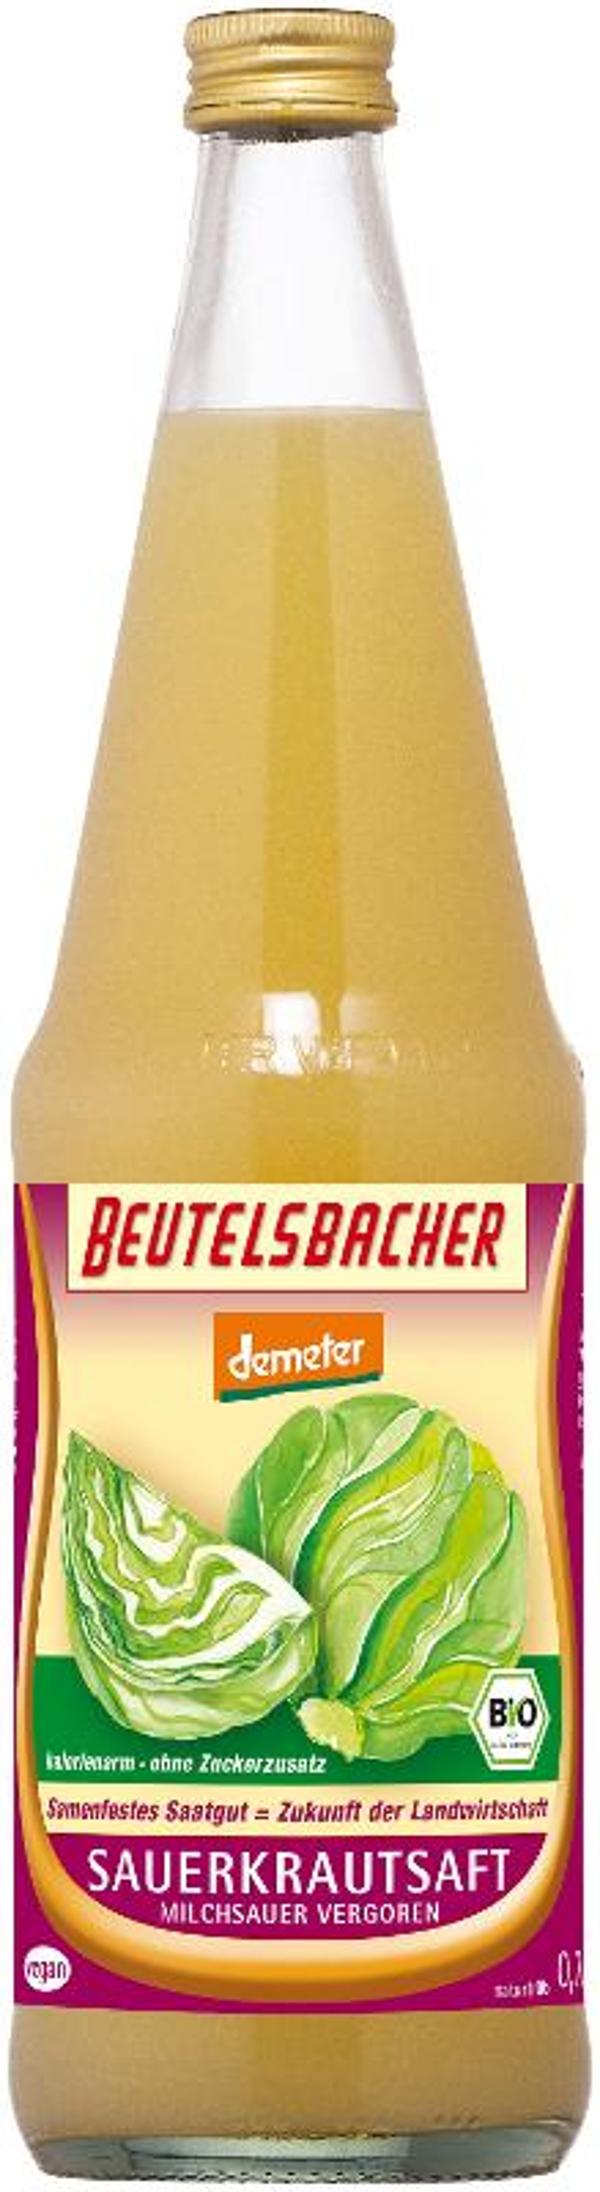 Produktfoto zu Sauerkrautsaft 'samenfest'